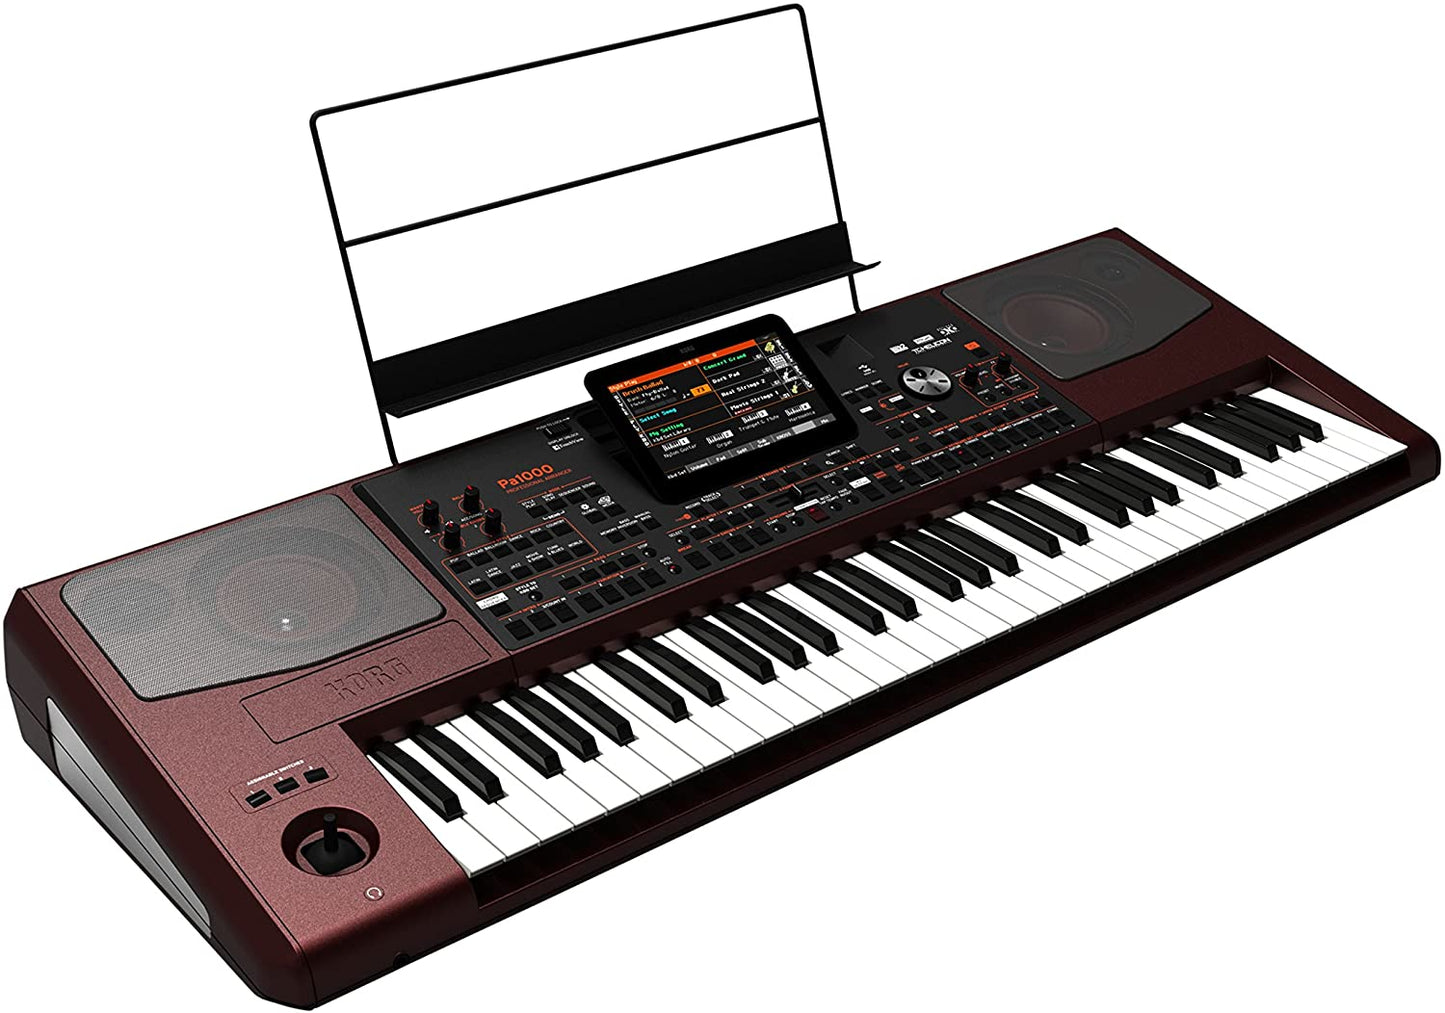 Korg Pa1000 61-Key Pro Arranger with Speakers essentials bundle